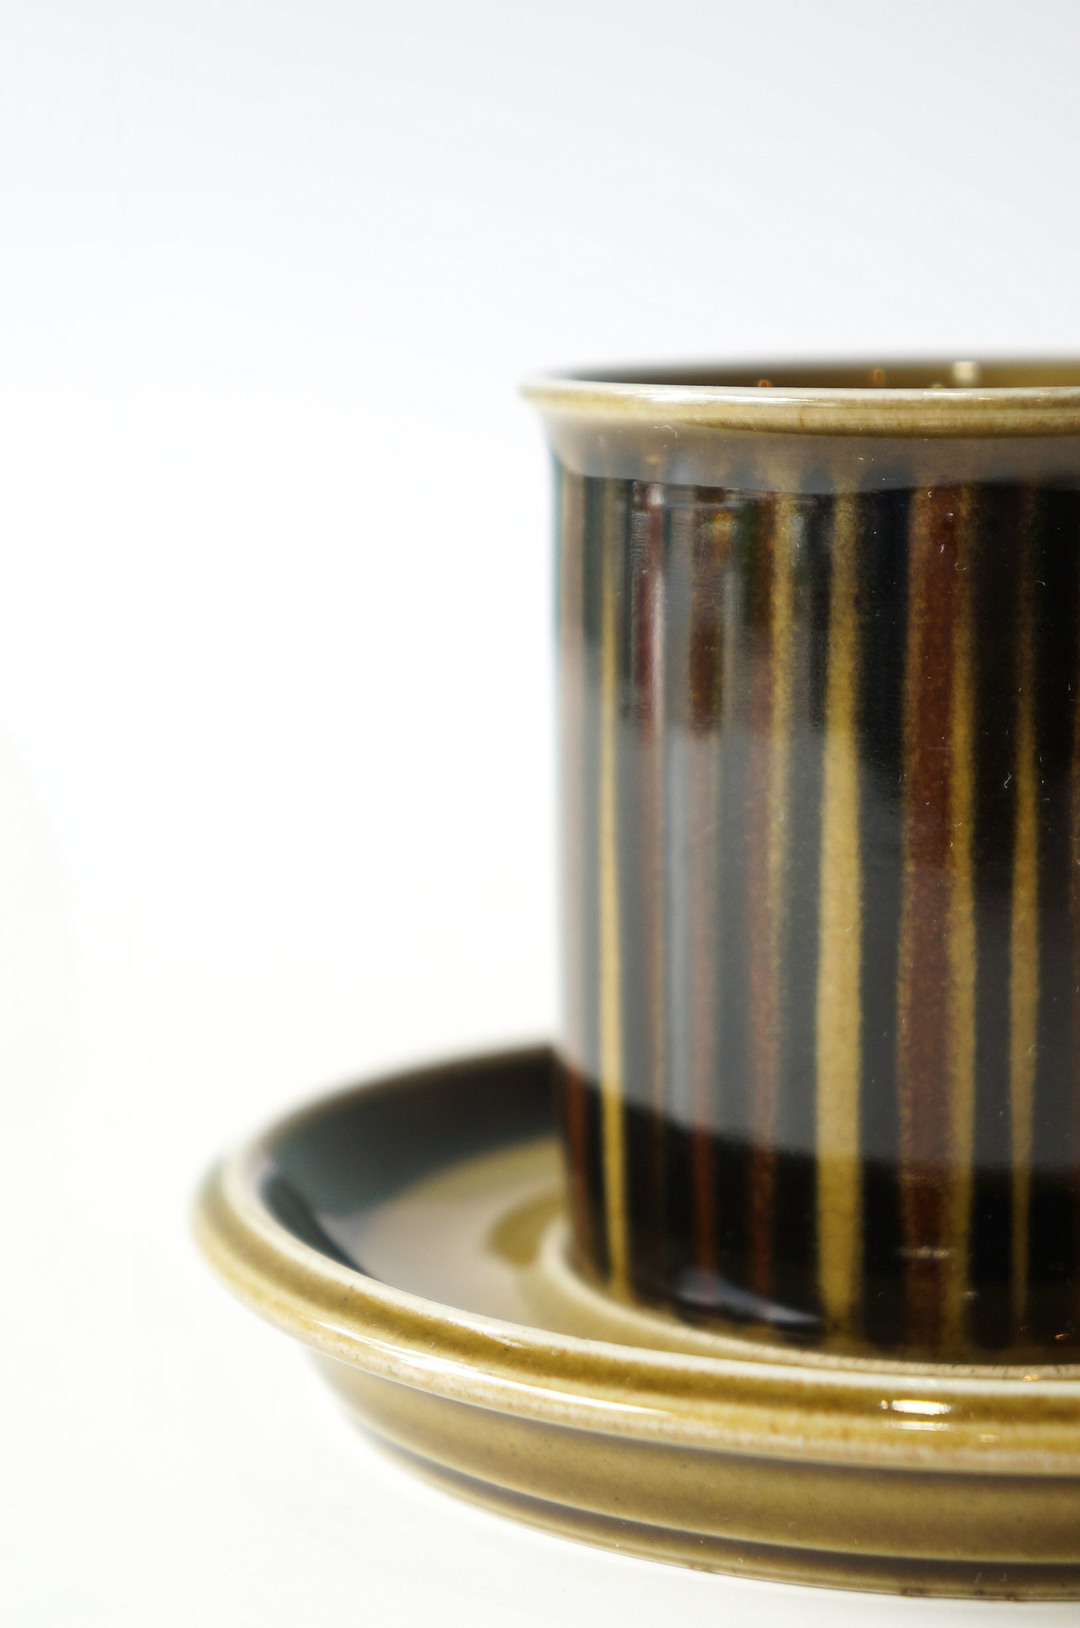 ARABIA Kosmos Coffee Cup and Saucer/アラビア コスモス コーヒーカップ＆ソーサー 北欧食器 フィンランドヴィンテージ 2